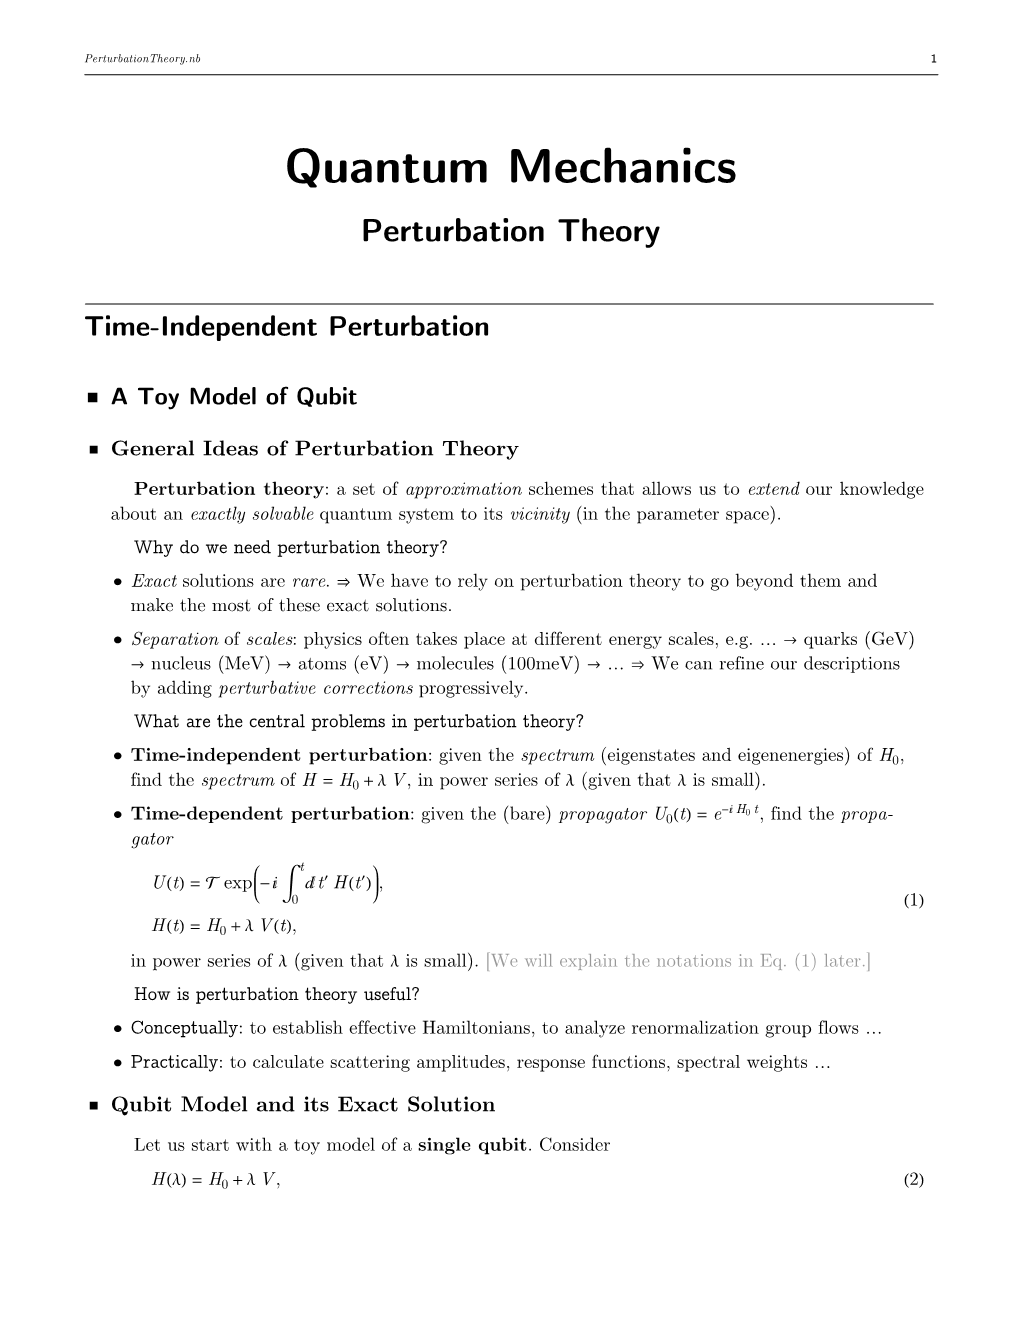 Quantum Mechanics Perturbation Theory